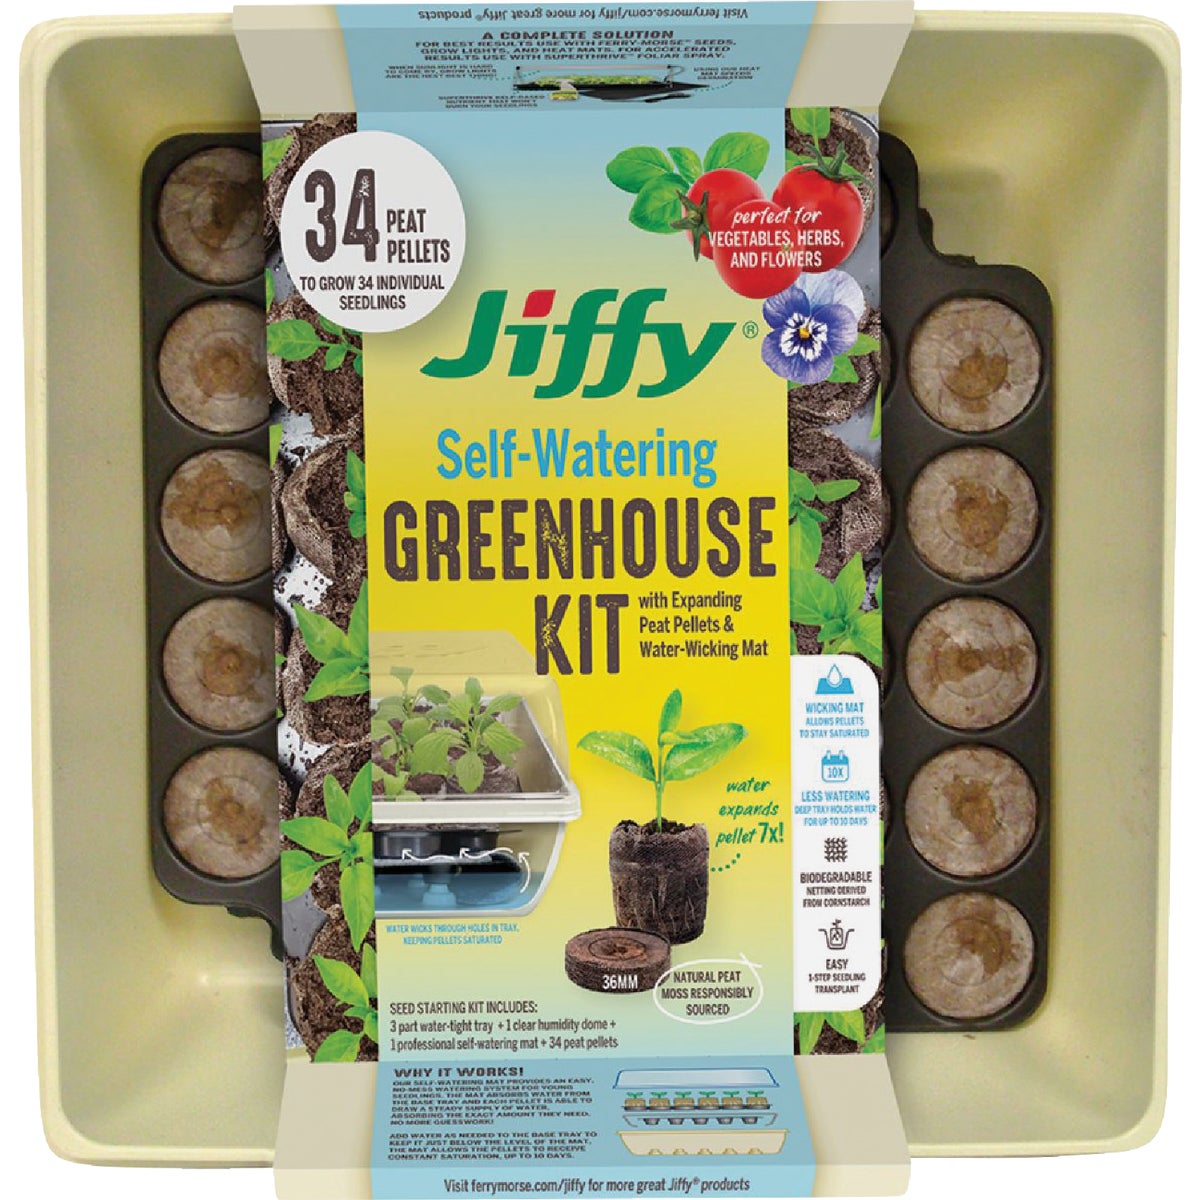 Item 703287, Jiffy self watering greenhouse with 34 peat pellets.